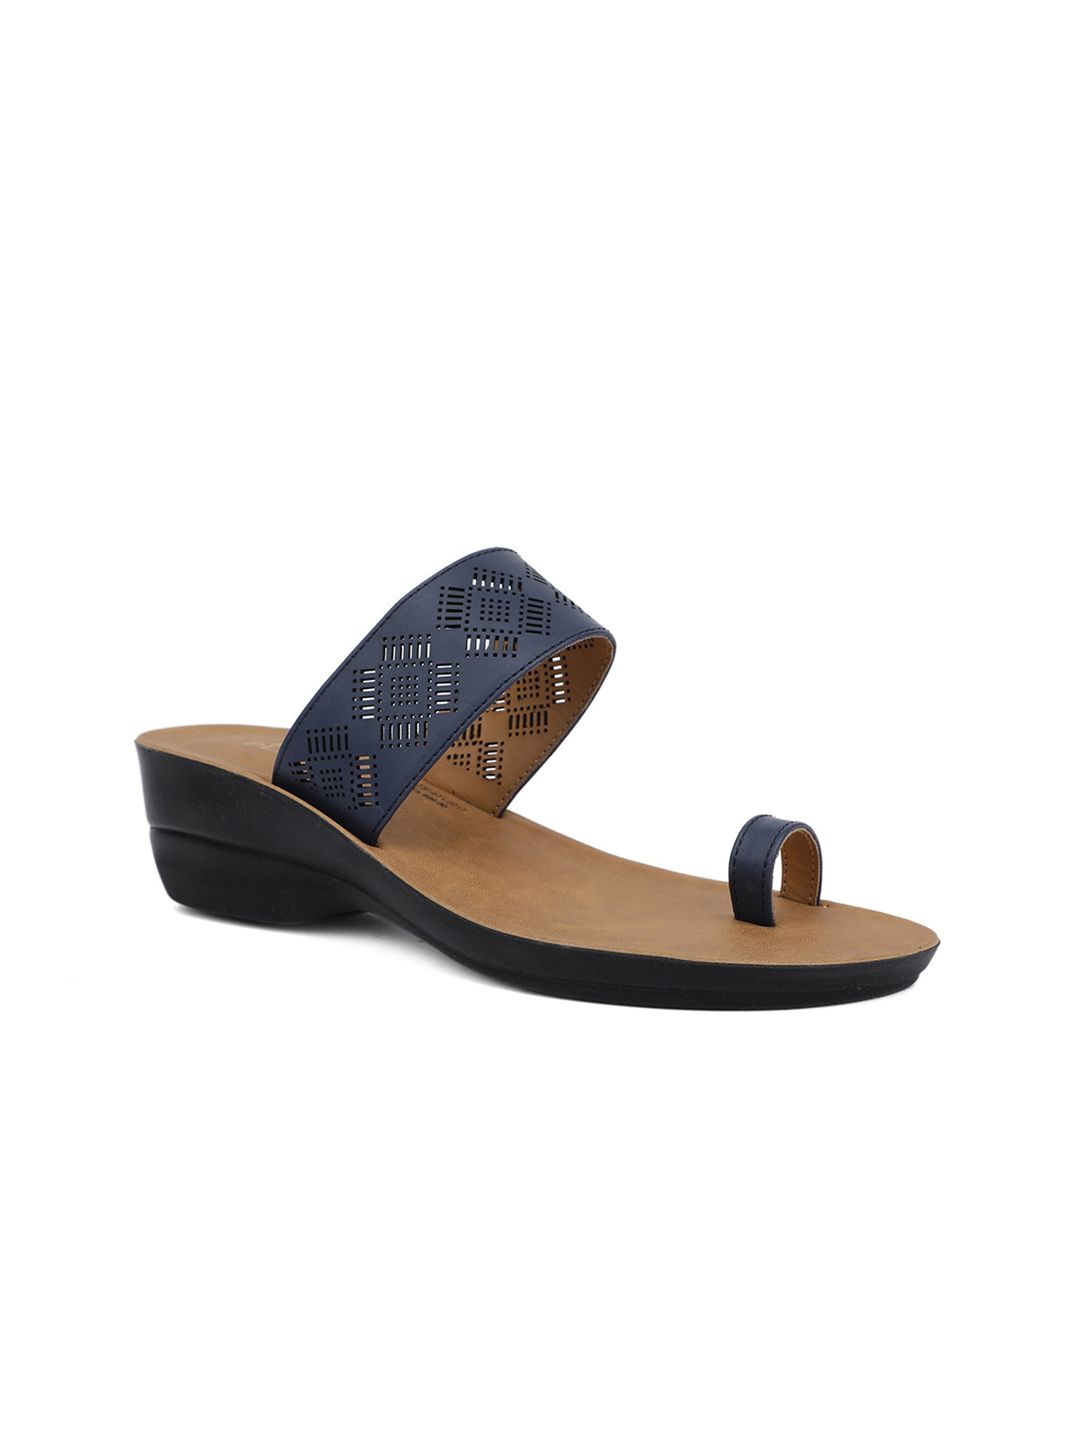 Bata Blue Wedge Sandals Price in India